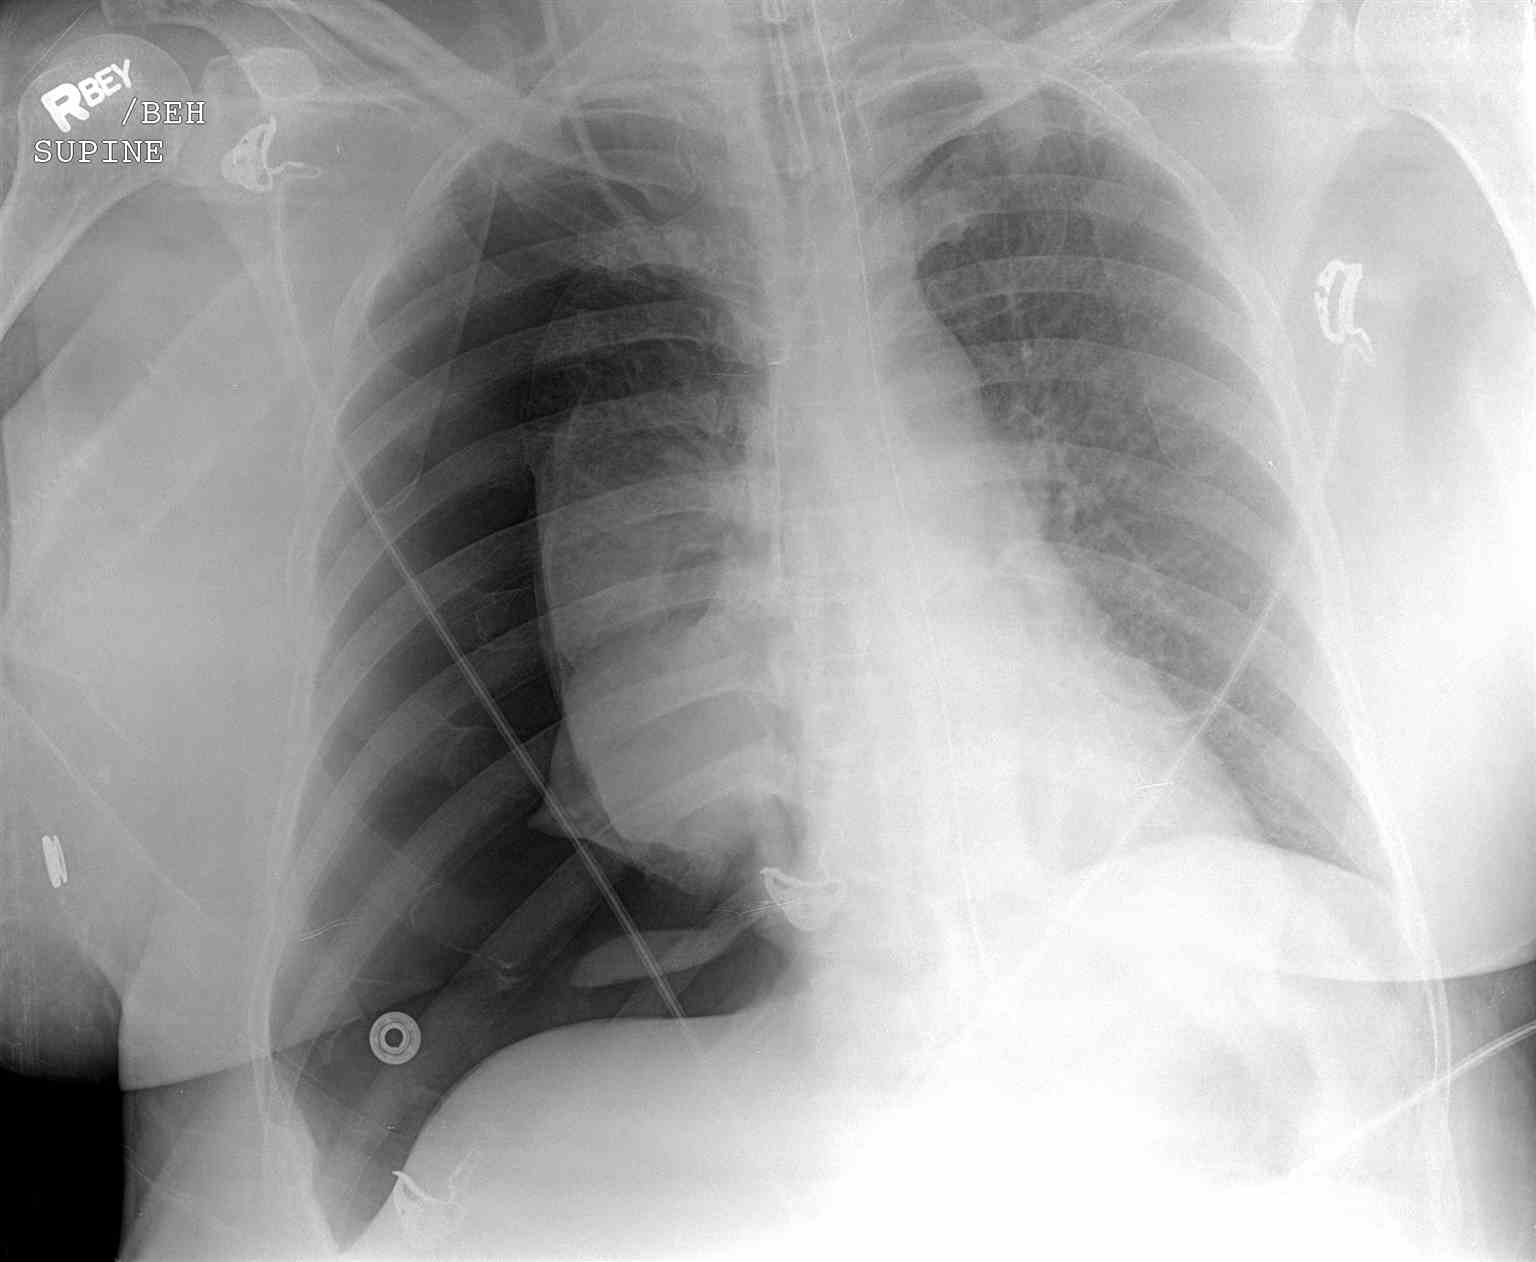 Chest Radiograph Tension Pneumothorax